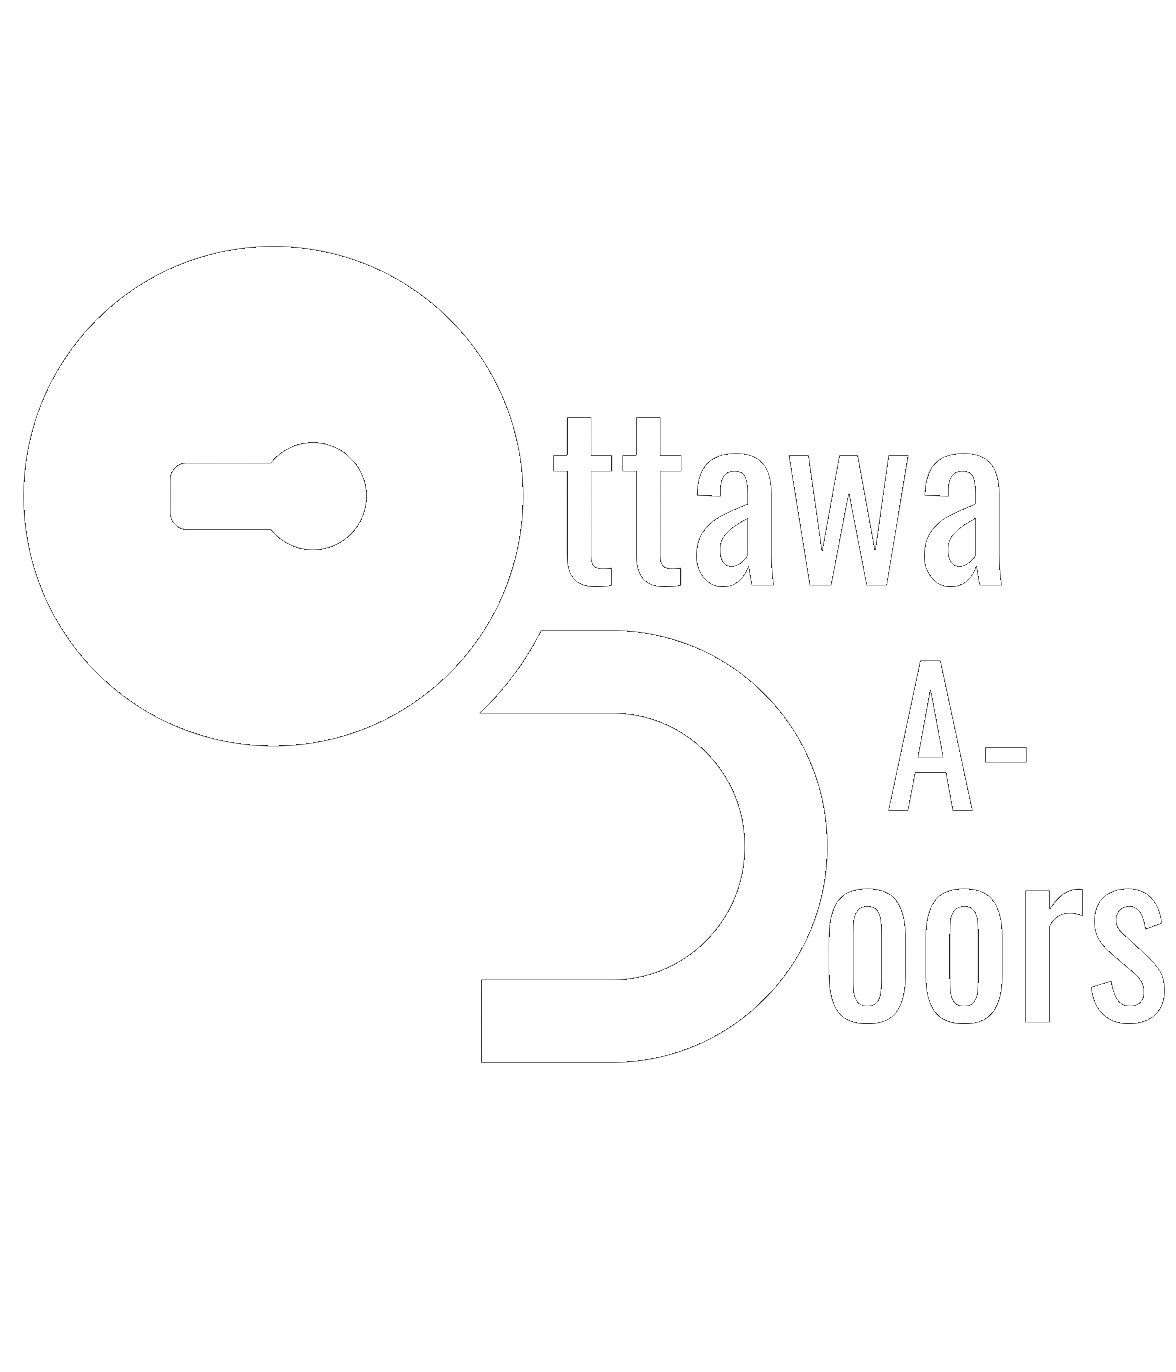 Ottawa A-Doors